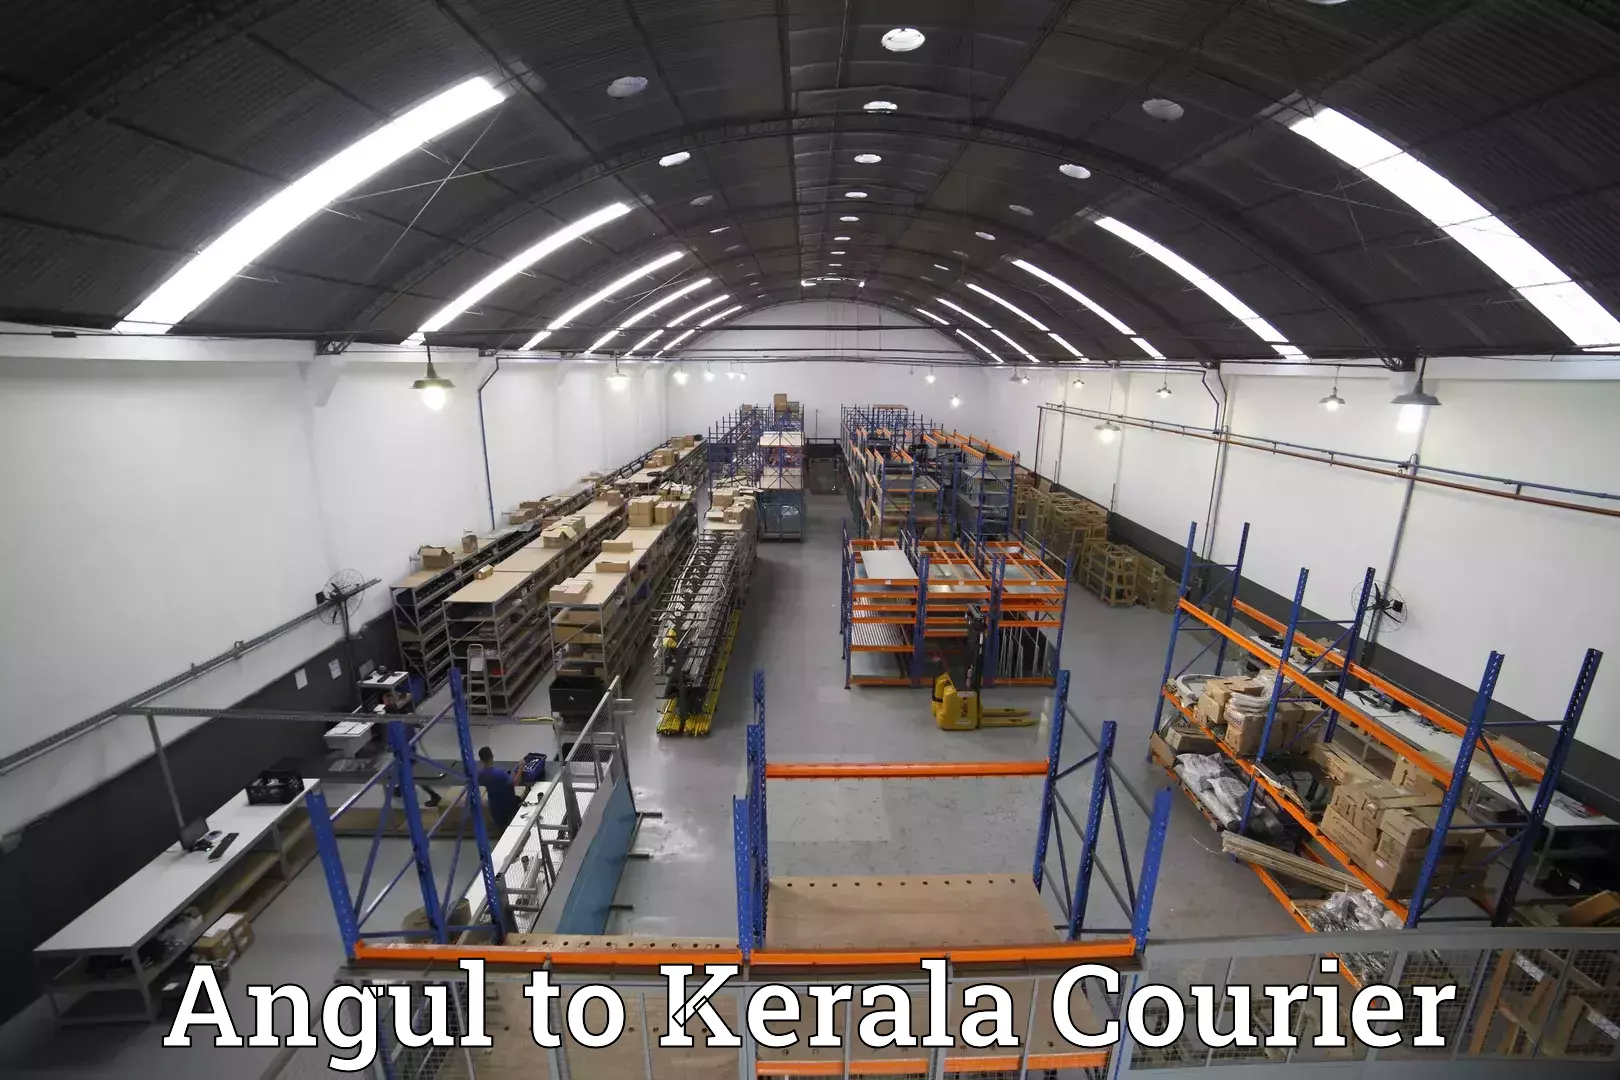 Luggage shipment specialists Angul to Kollam